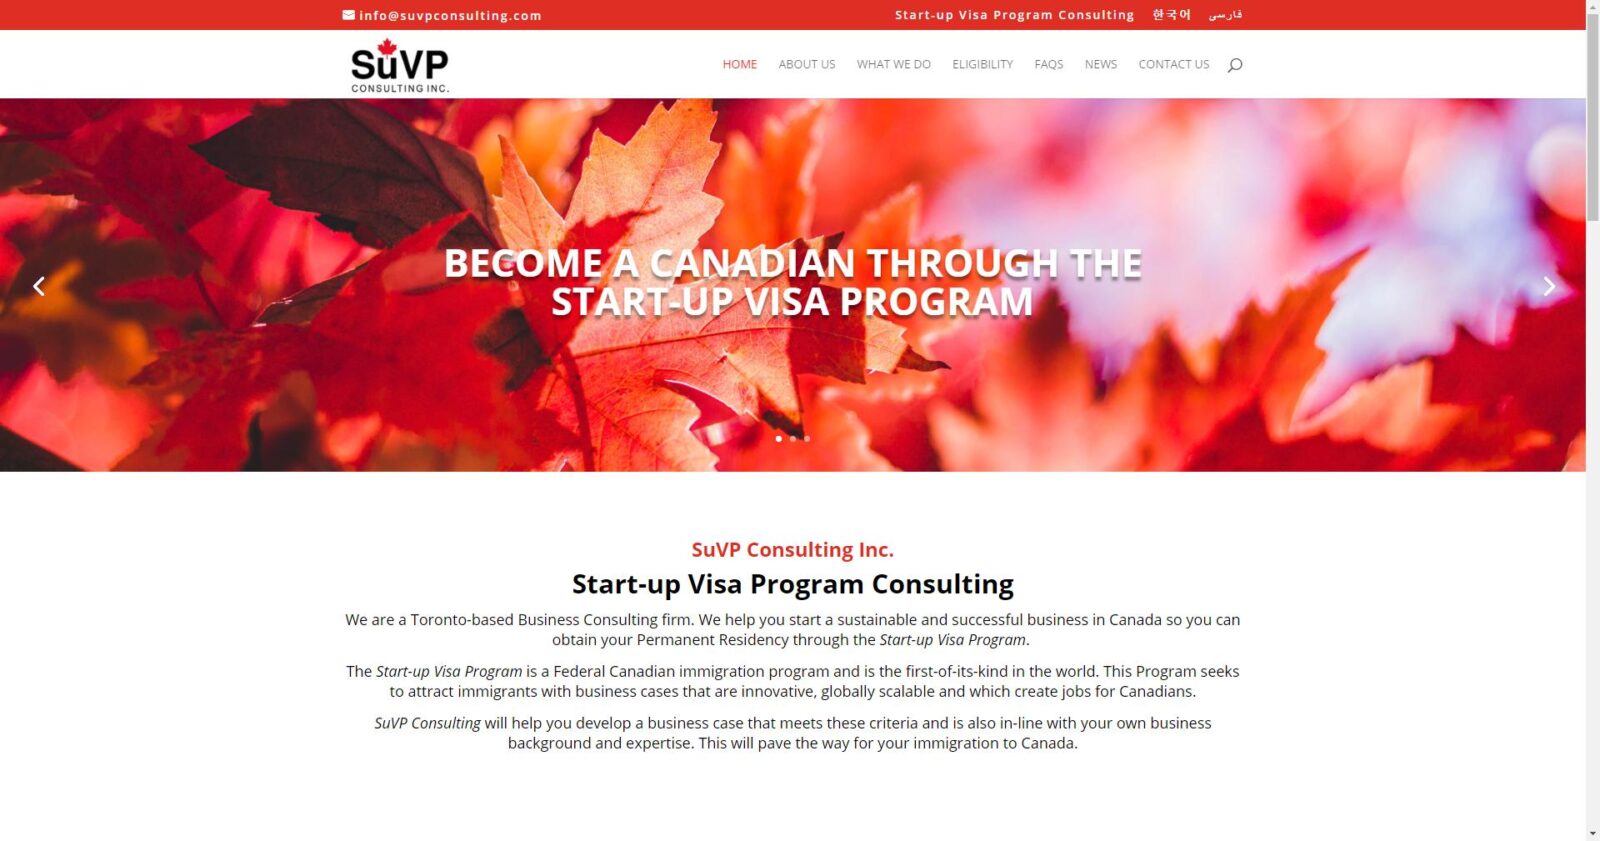 SuVP Consulting Inc